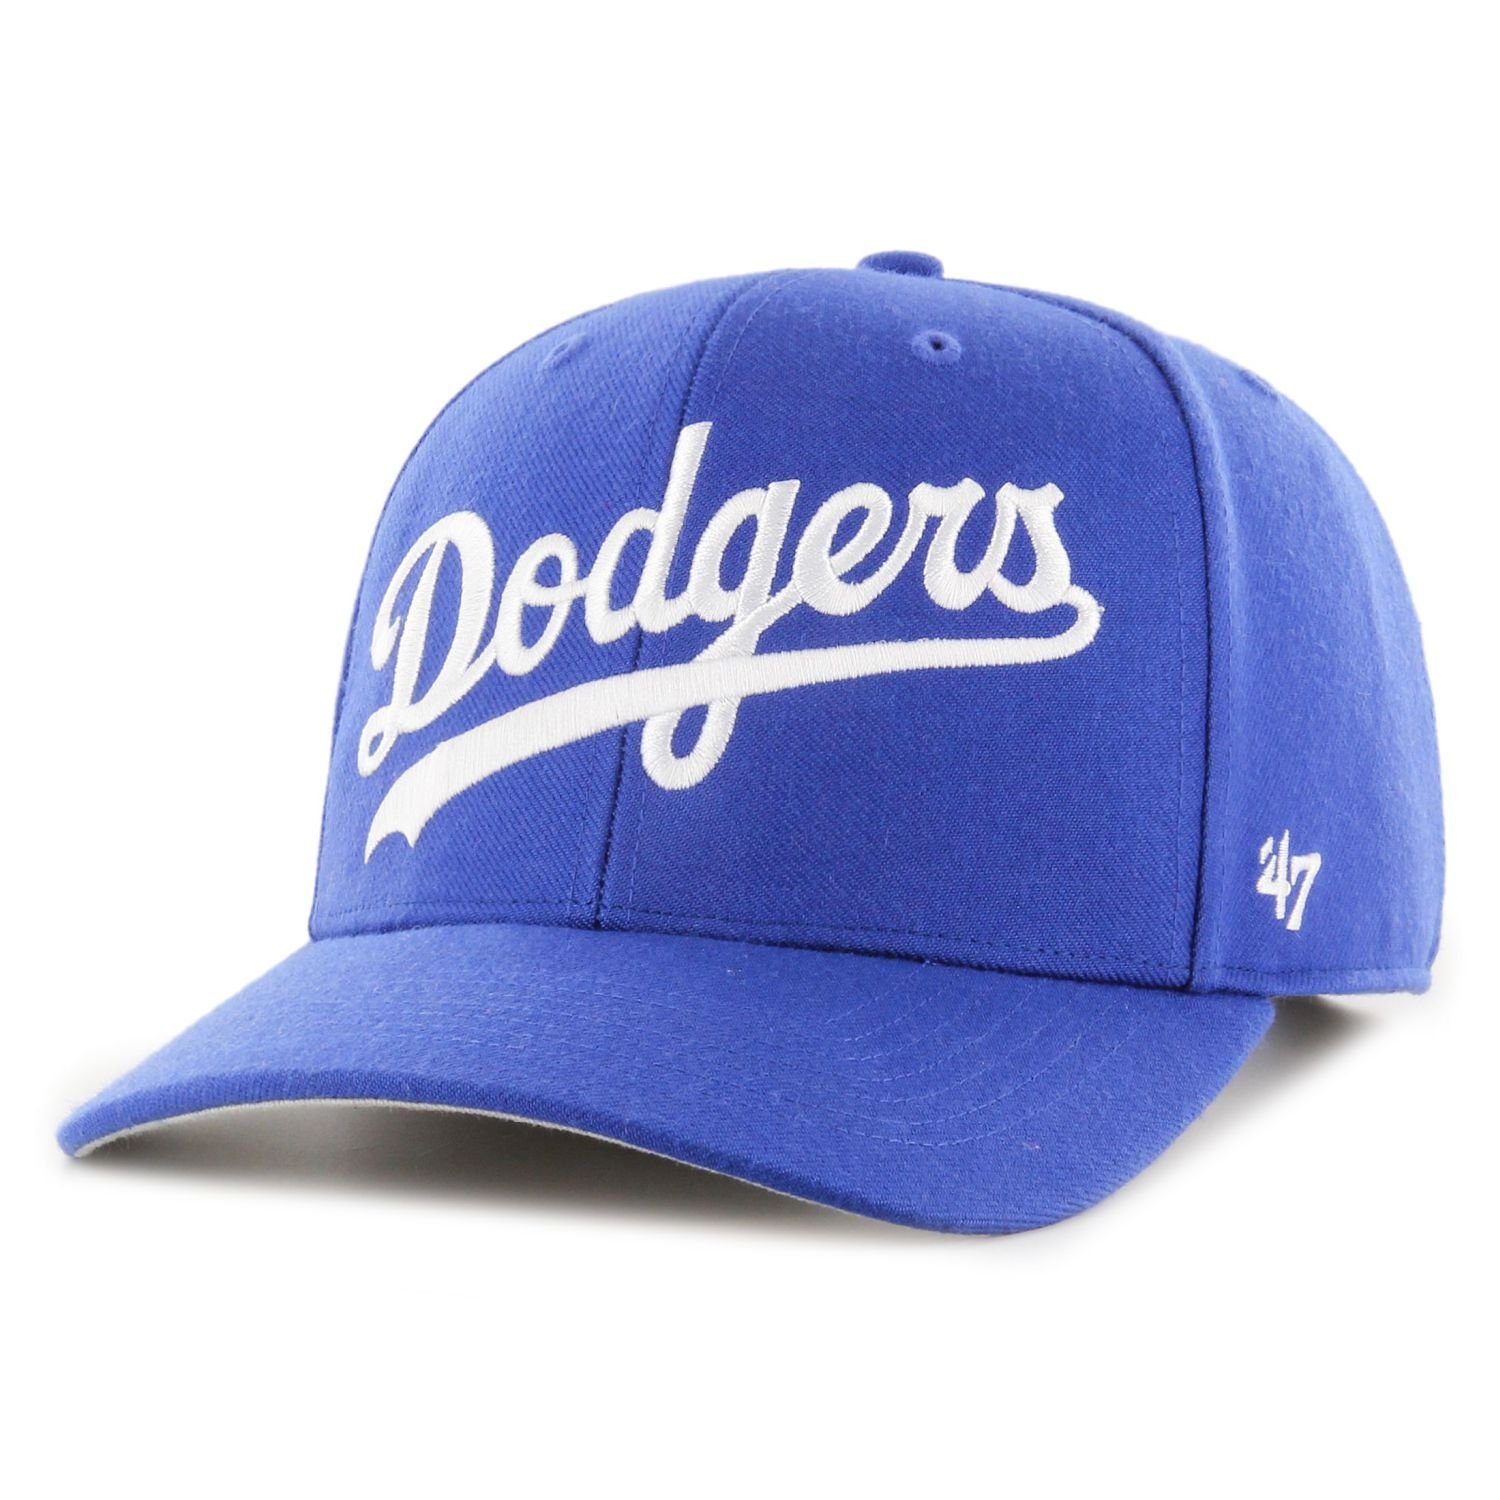 Profile Brand Angeles Deep Cap Los SCRIPT Snapback ZONE Dodgers '47